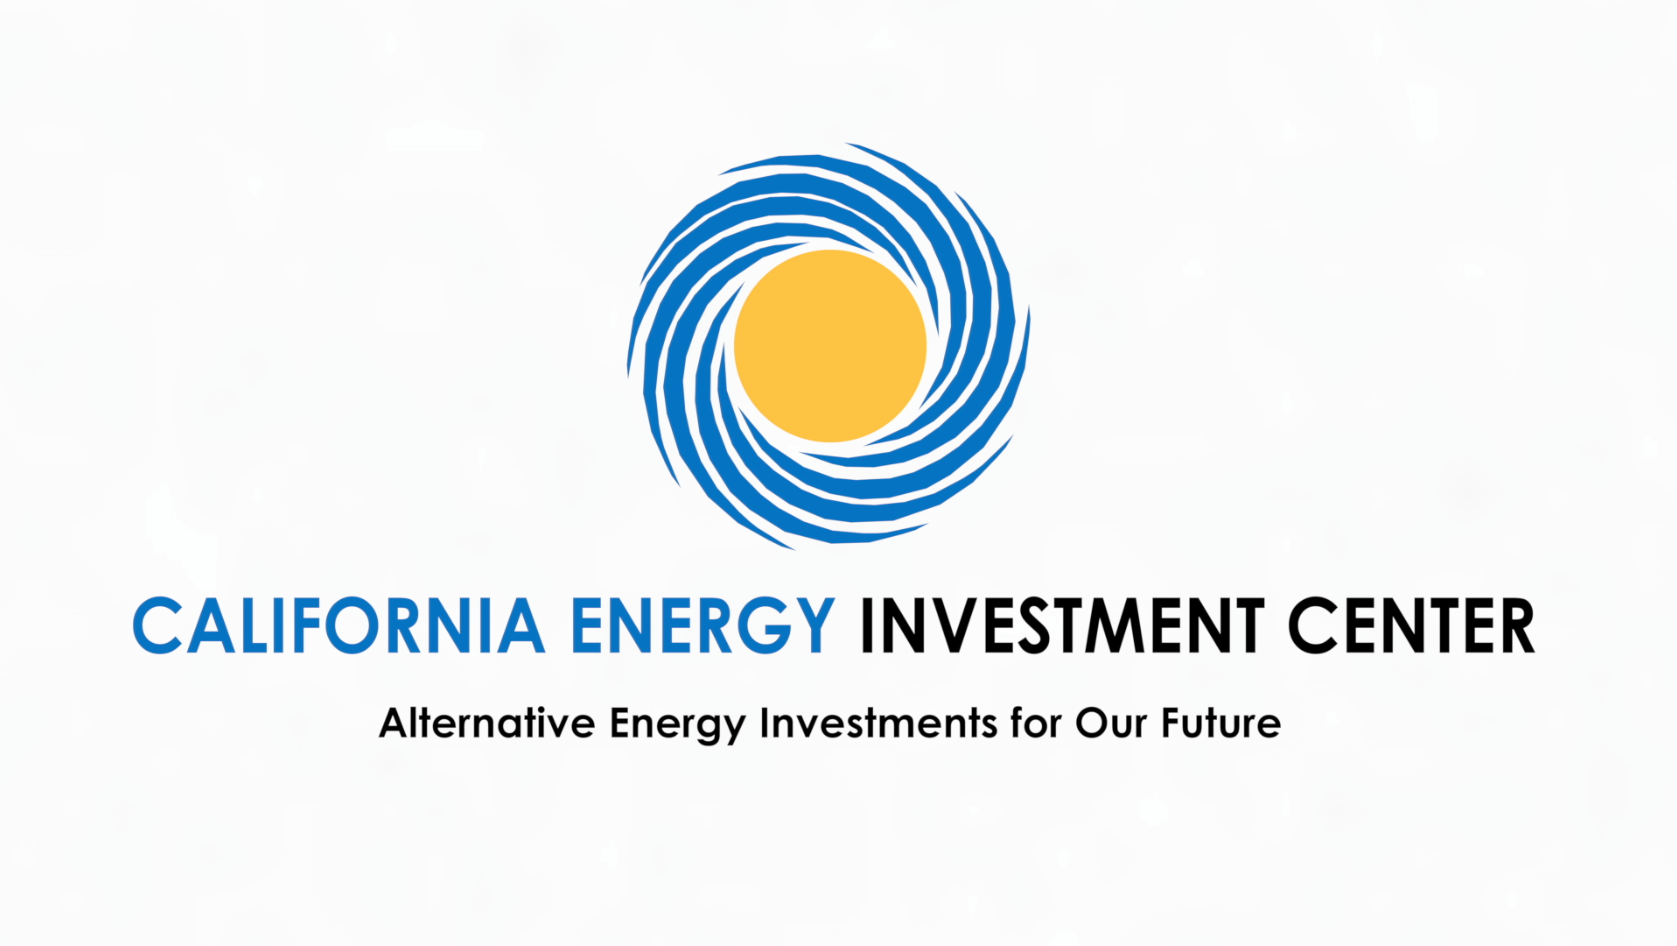 CALIFORNIA ENERGY INVESTMENT CENTER